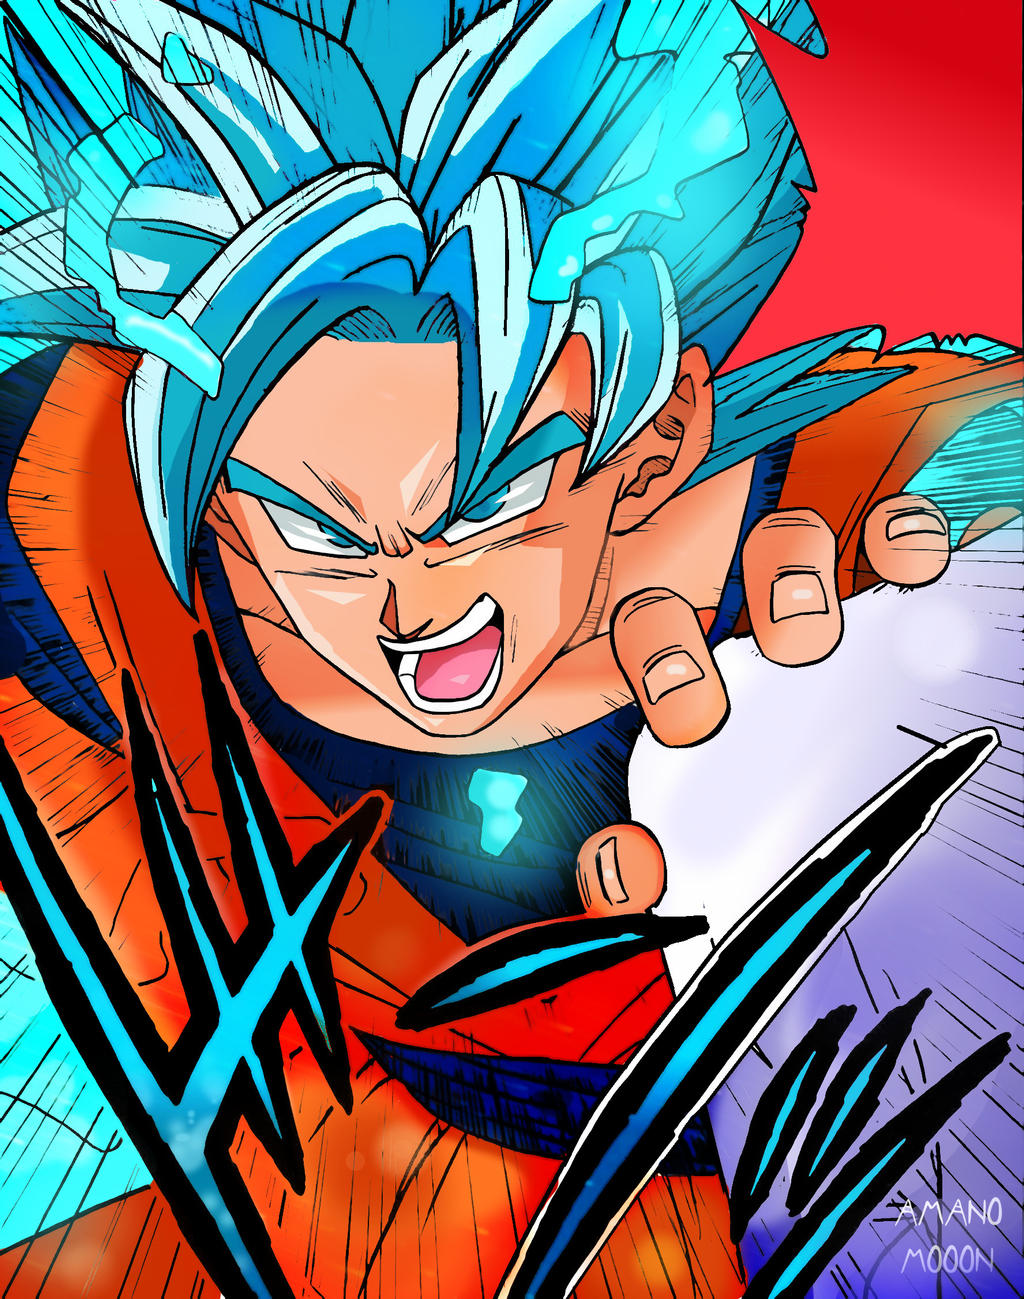 Dragon Ball Super Goku Saiyan vs Toppo Chapter 29 by Amanomoon on DeviantArt